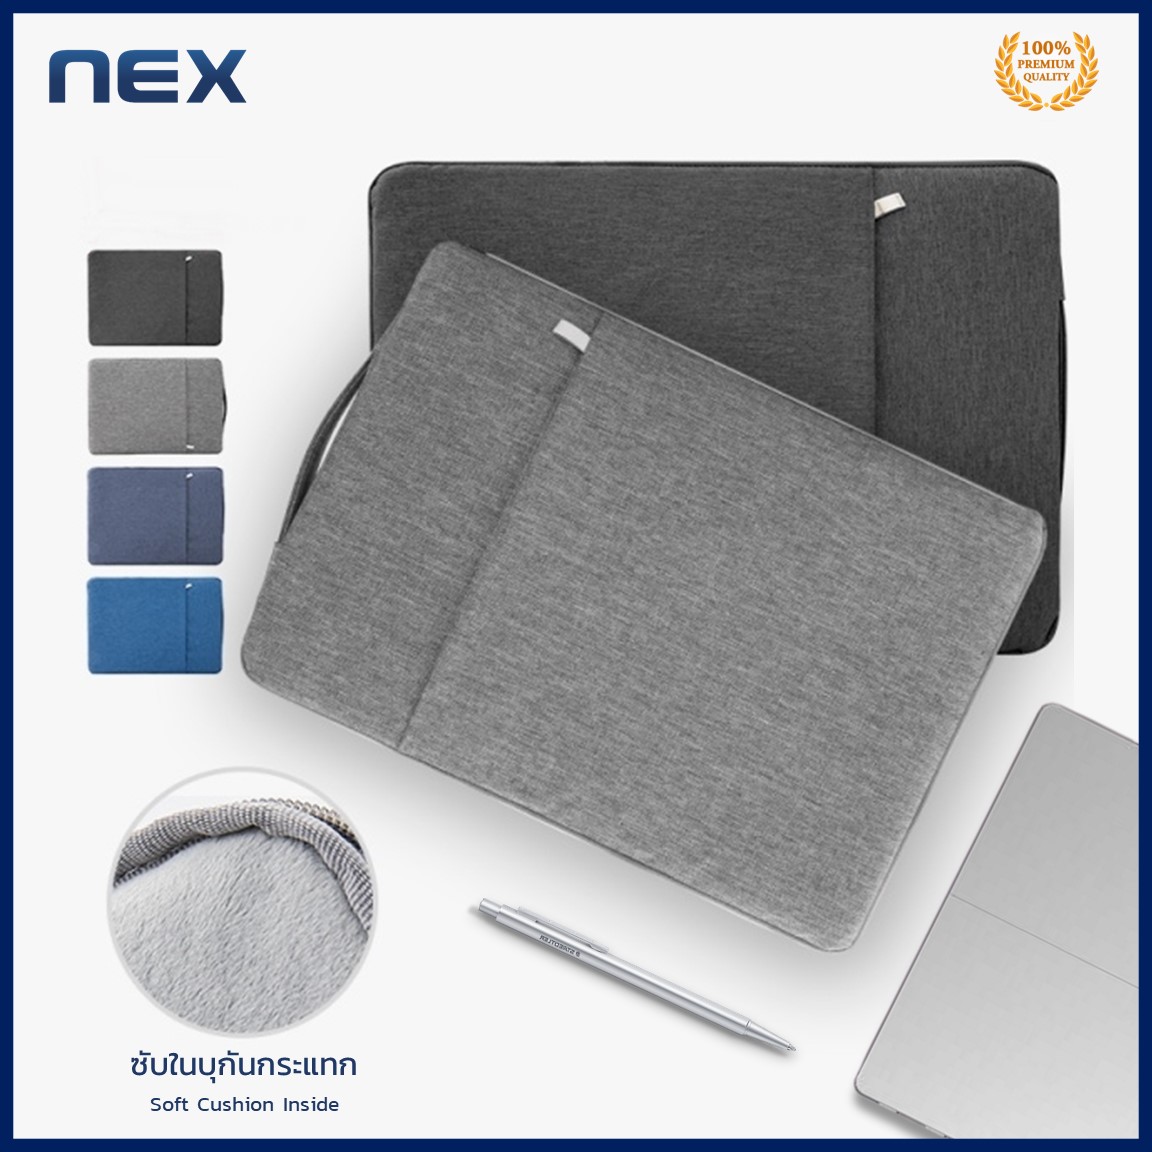 NEX กระเป๋าโน๊ตบุ๊ค soft case เคสMacbook Air Pro Retina เคสSurface Pro เคสโน๊ตบุ๊ค 11.6 12.5 13 14 15.4 15.6 16นิ้ว ซองแล็ปท็อป เคสไอแพด แท็บเล็ต Laptop Bag Macbook iPad Surface Sleeve Case